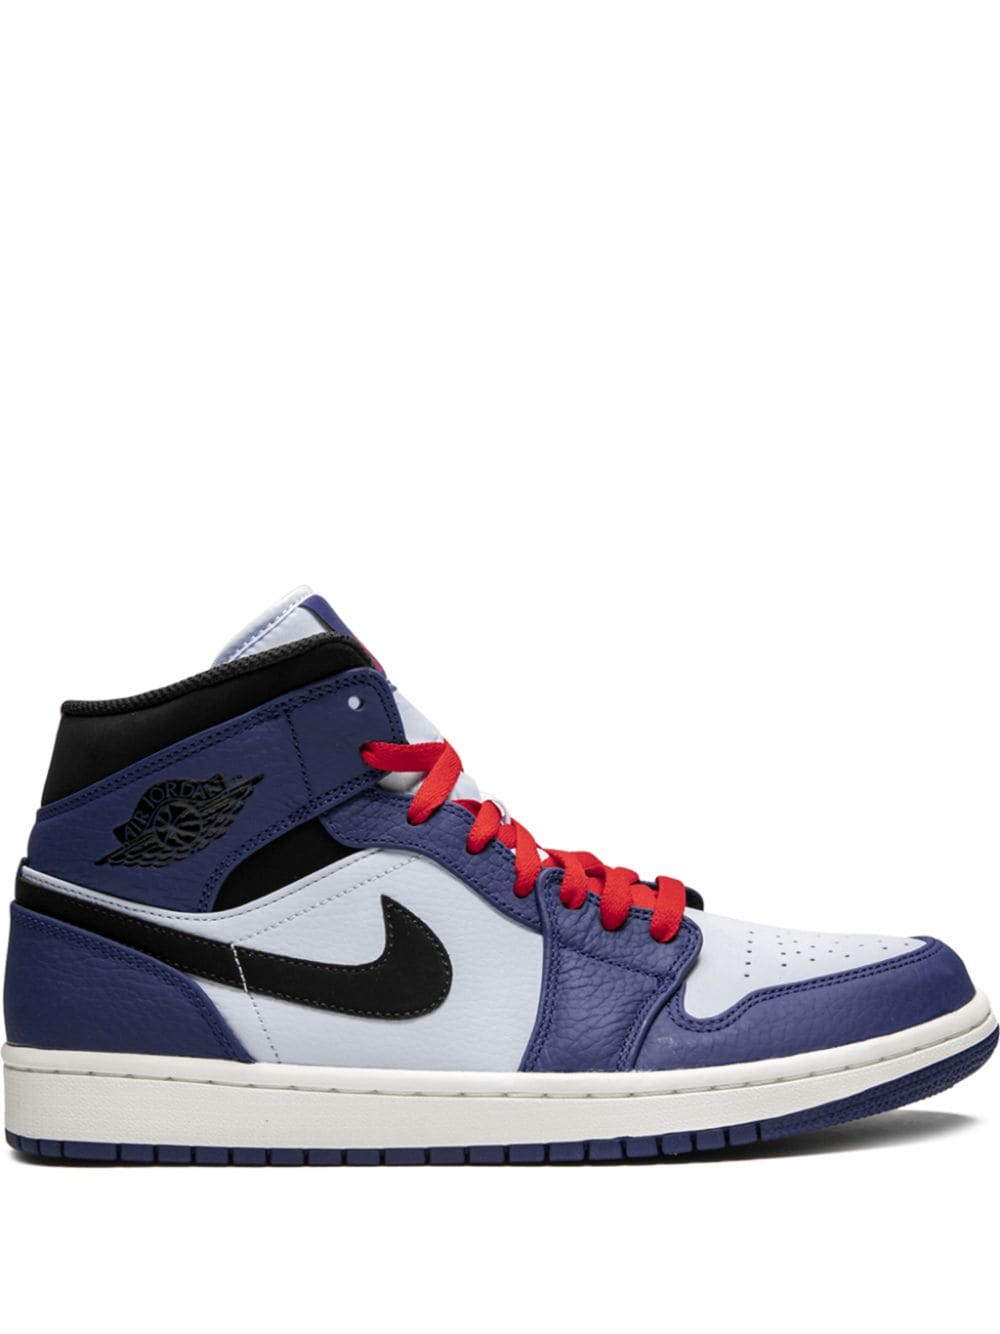 Jordan Air Jordan 1 MID SE sneakers - Blue